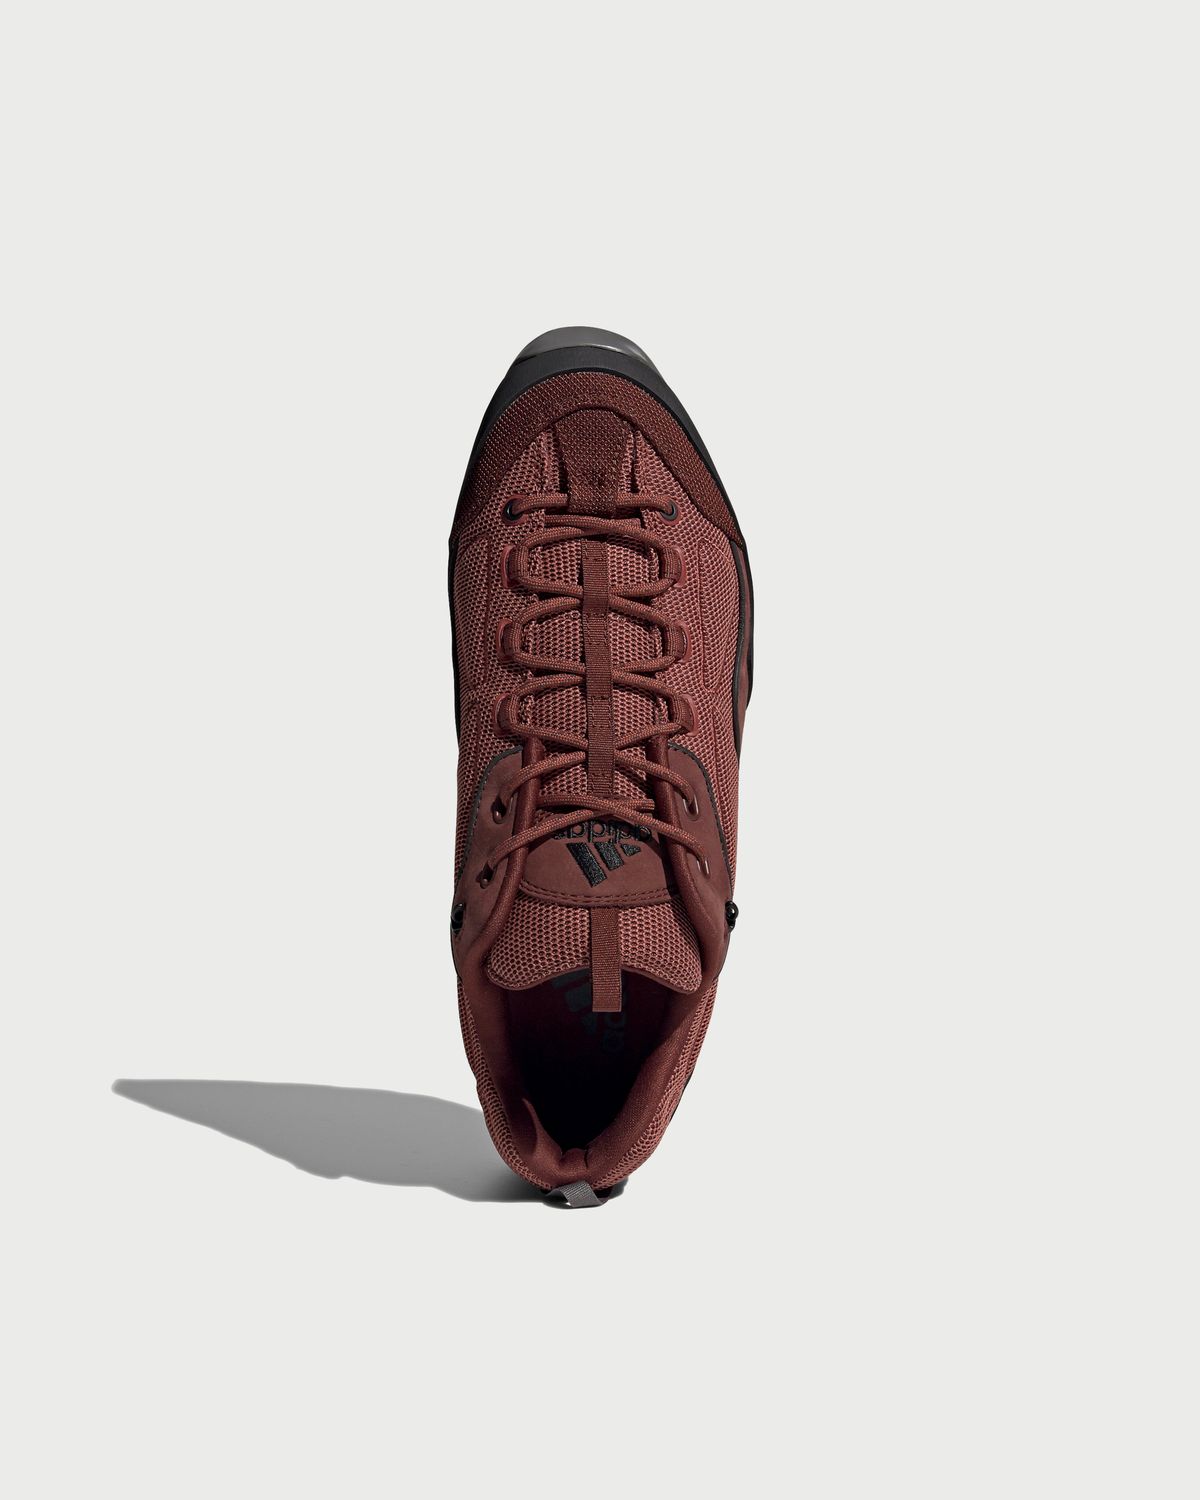 Adidas – Sahalex Brown - Sneakers - Brown - Image 3